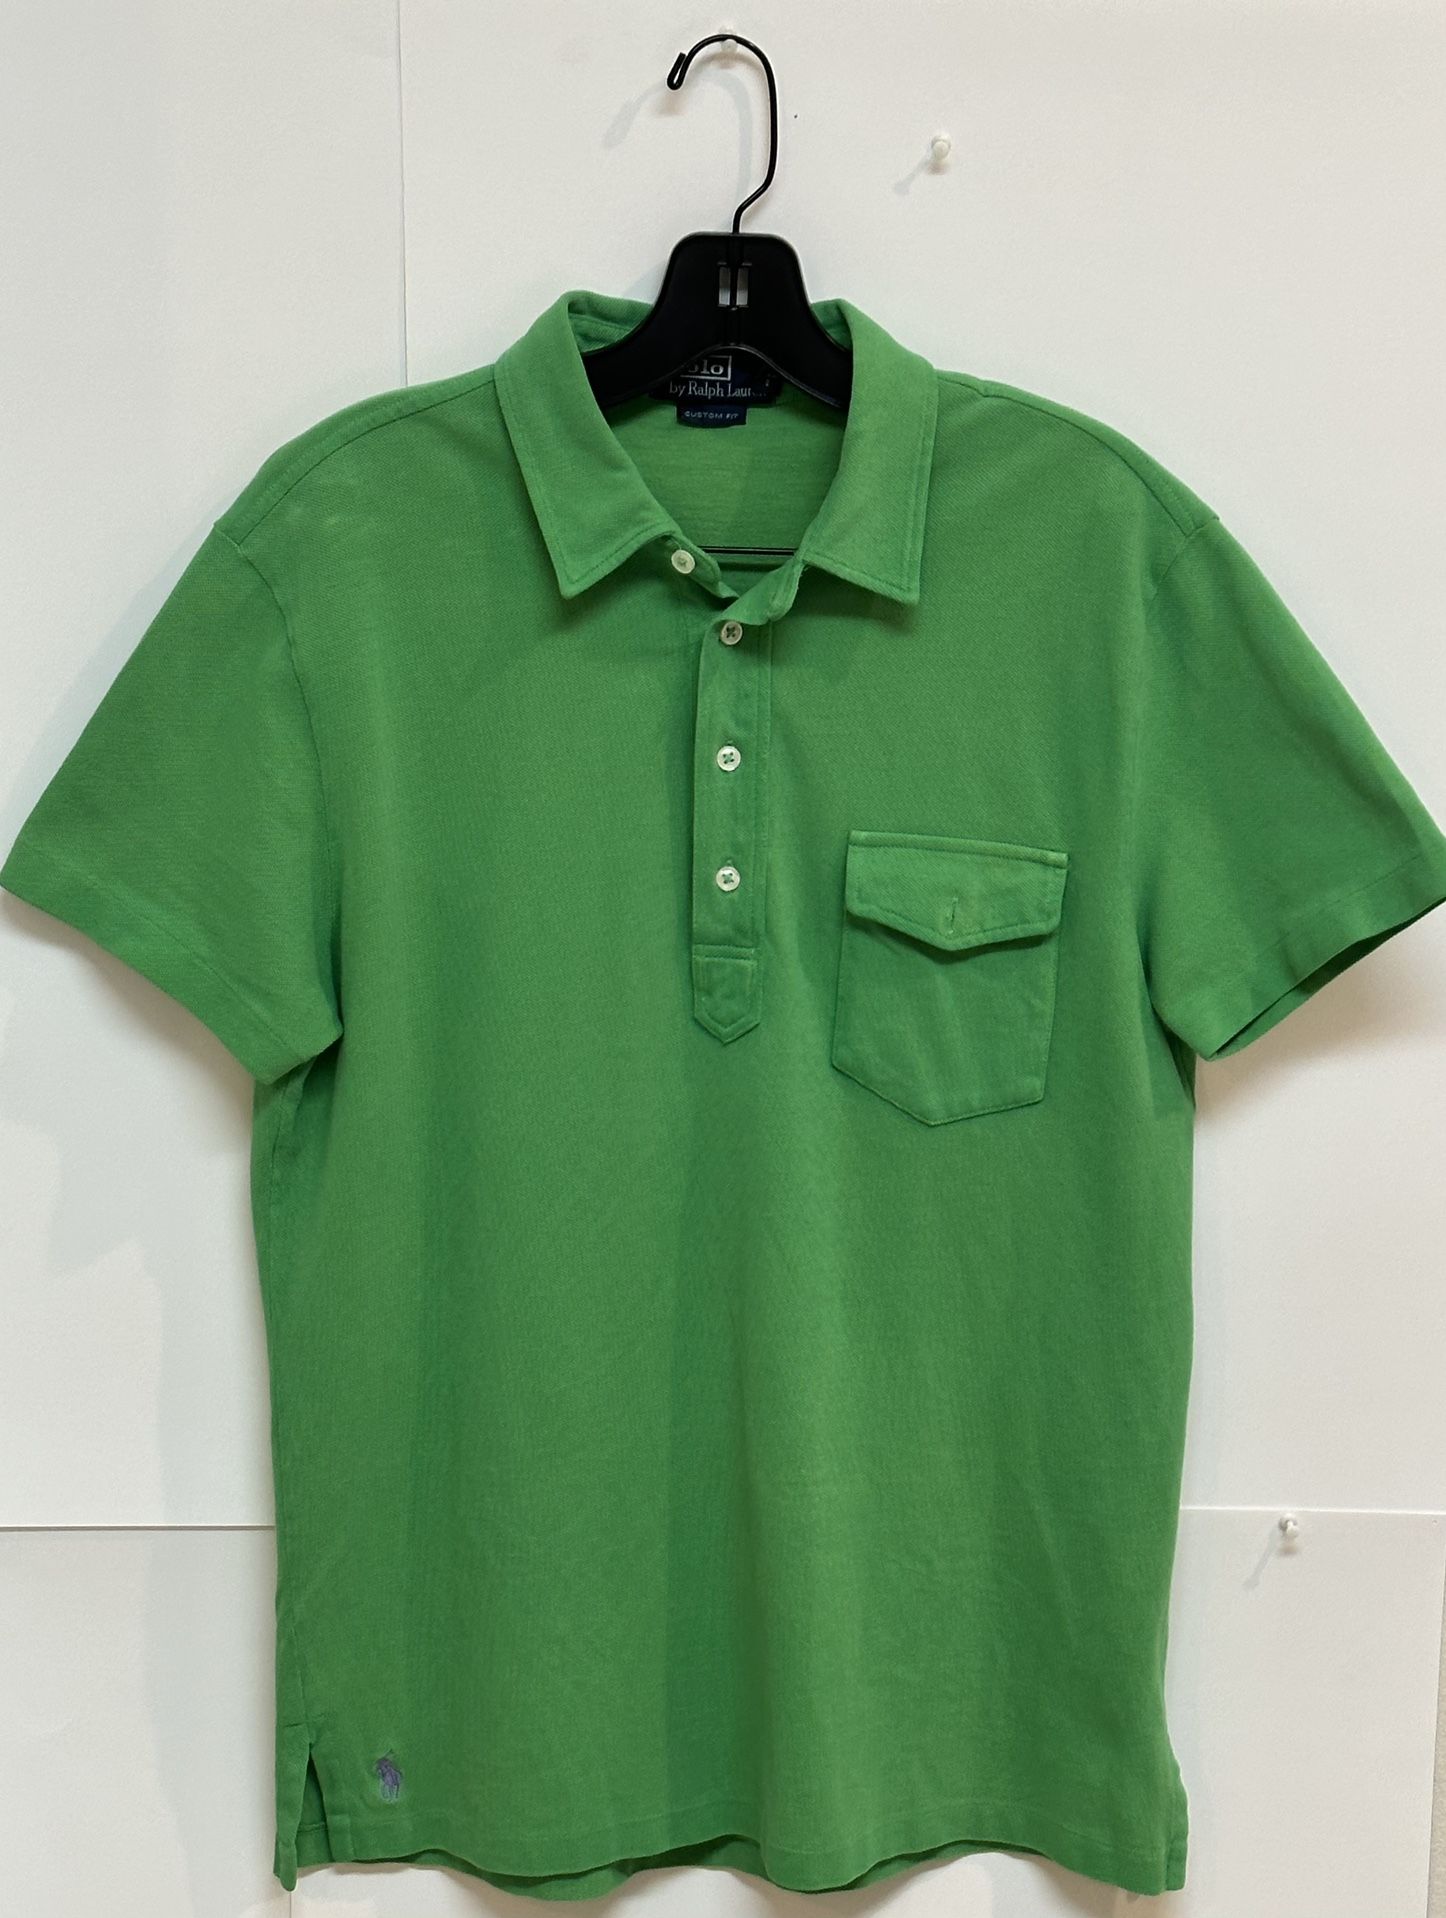 Polo Ralph Lauren Men’s Polo Shirt | Custom Fit Mesh | Green/Purple Pony / M